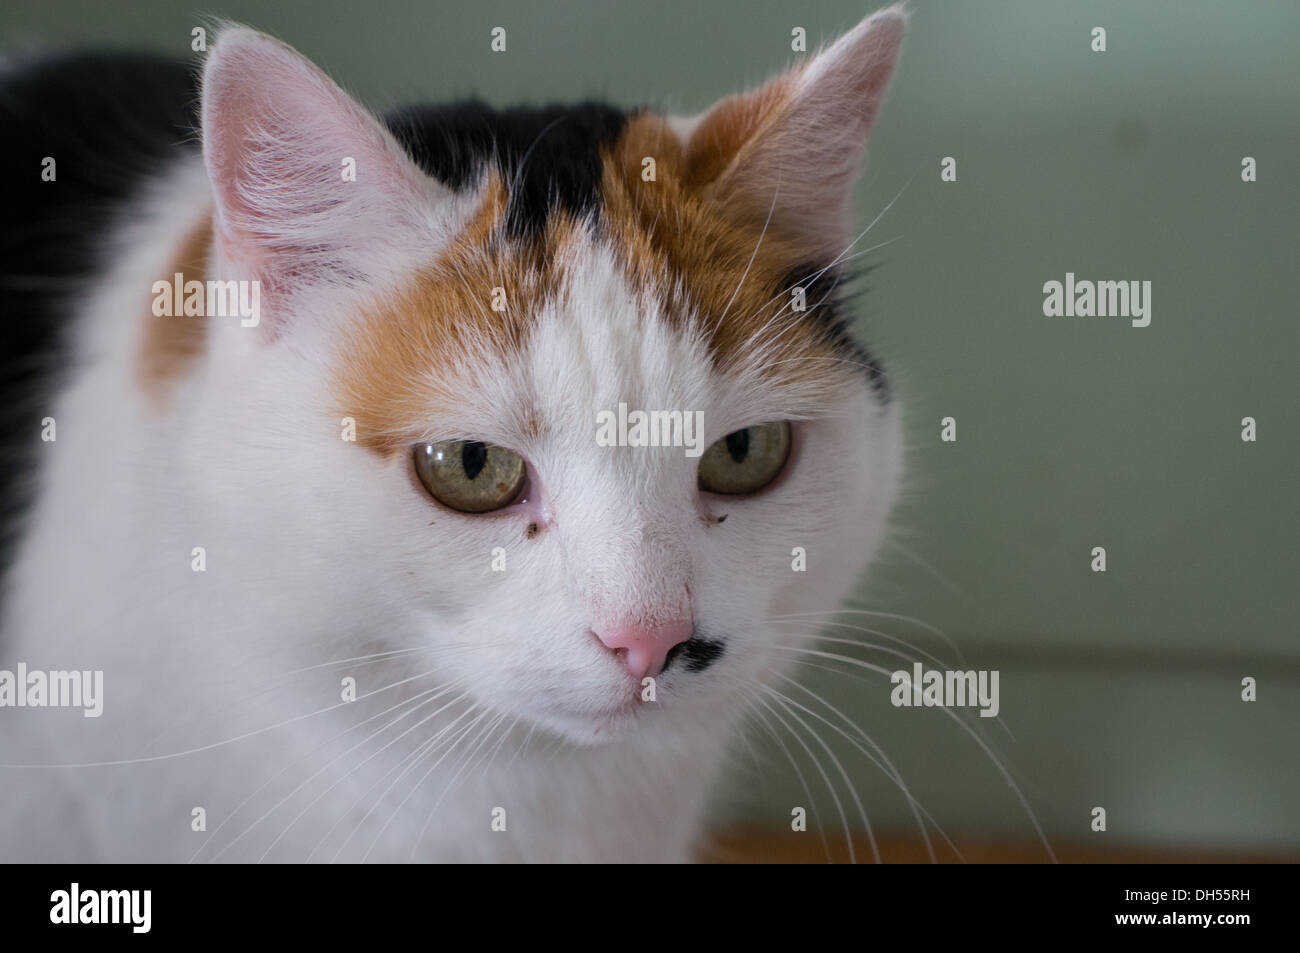 Cat face Stock Photo